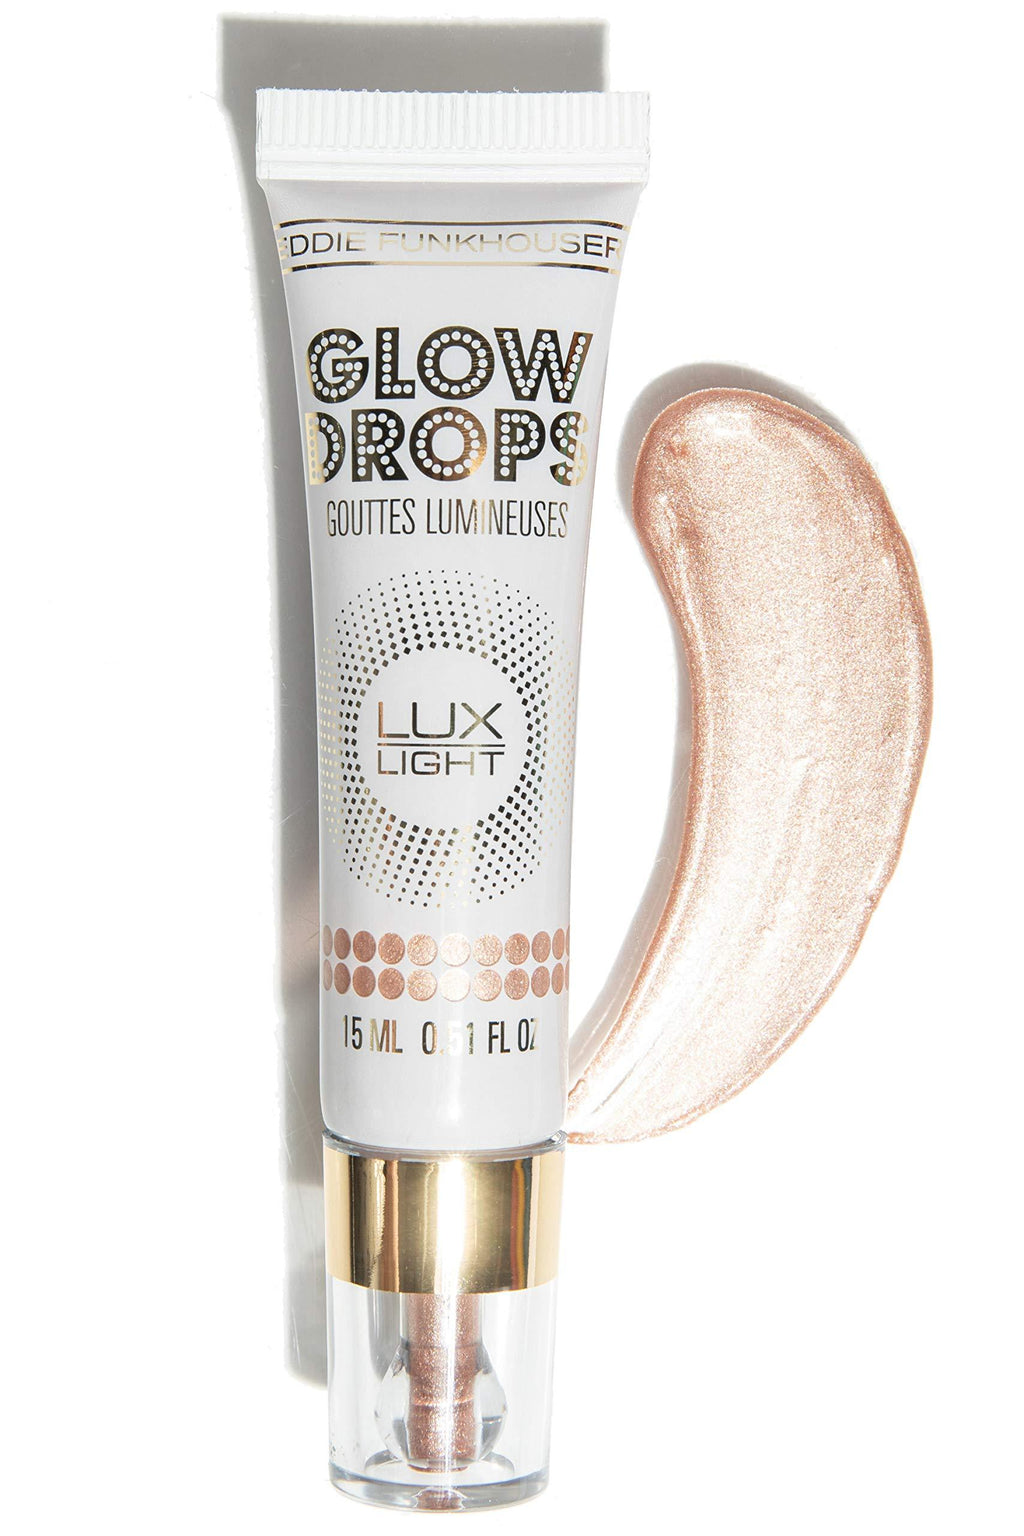 EDDIE FUNKHOUSER Luxlight Glow Drops Liquid Highlighter Makeup, Illuminator for Radiant Skin - BeesActive Australia